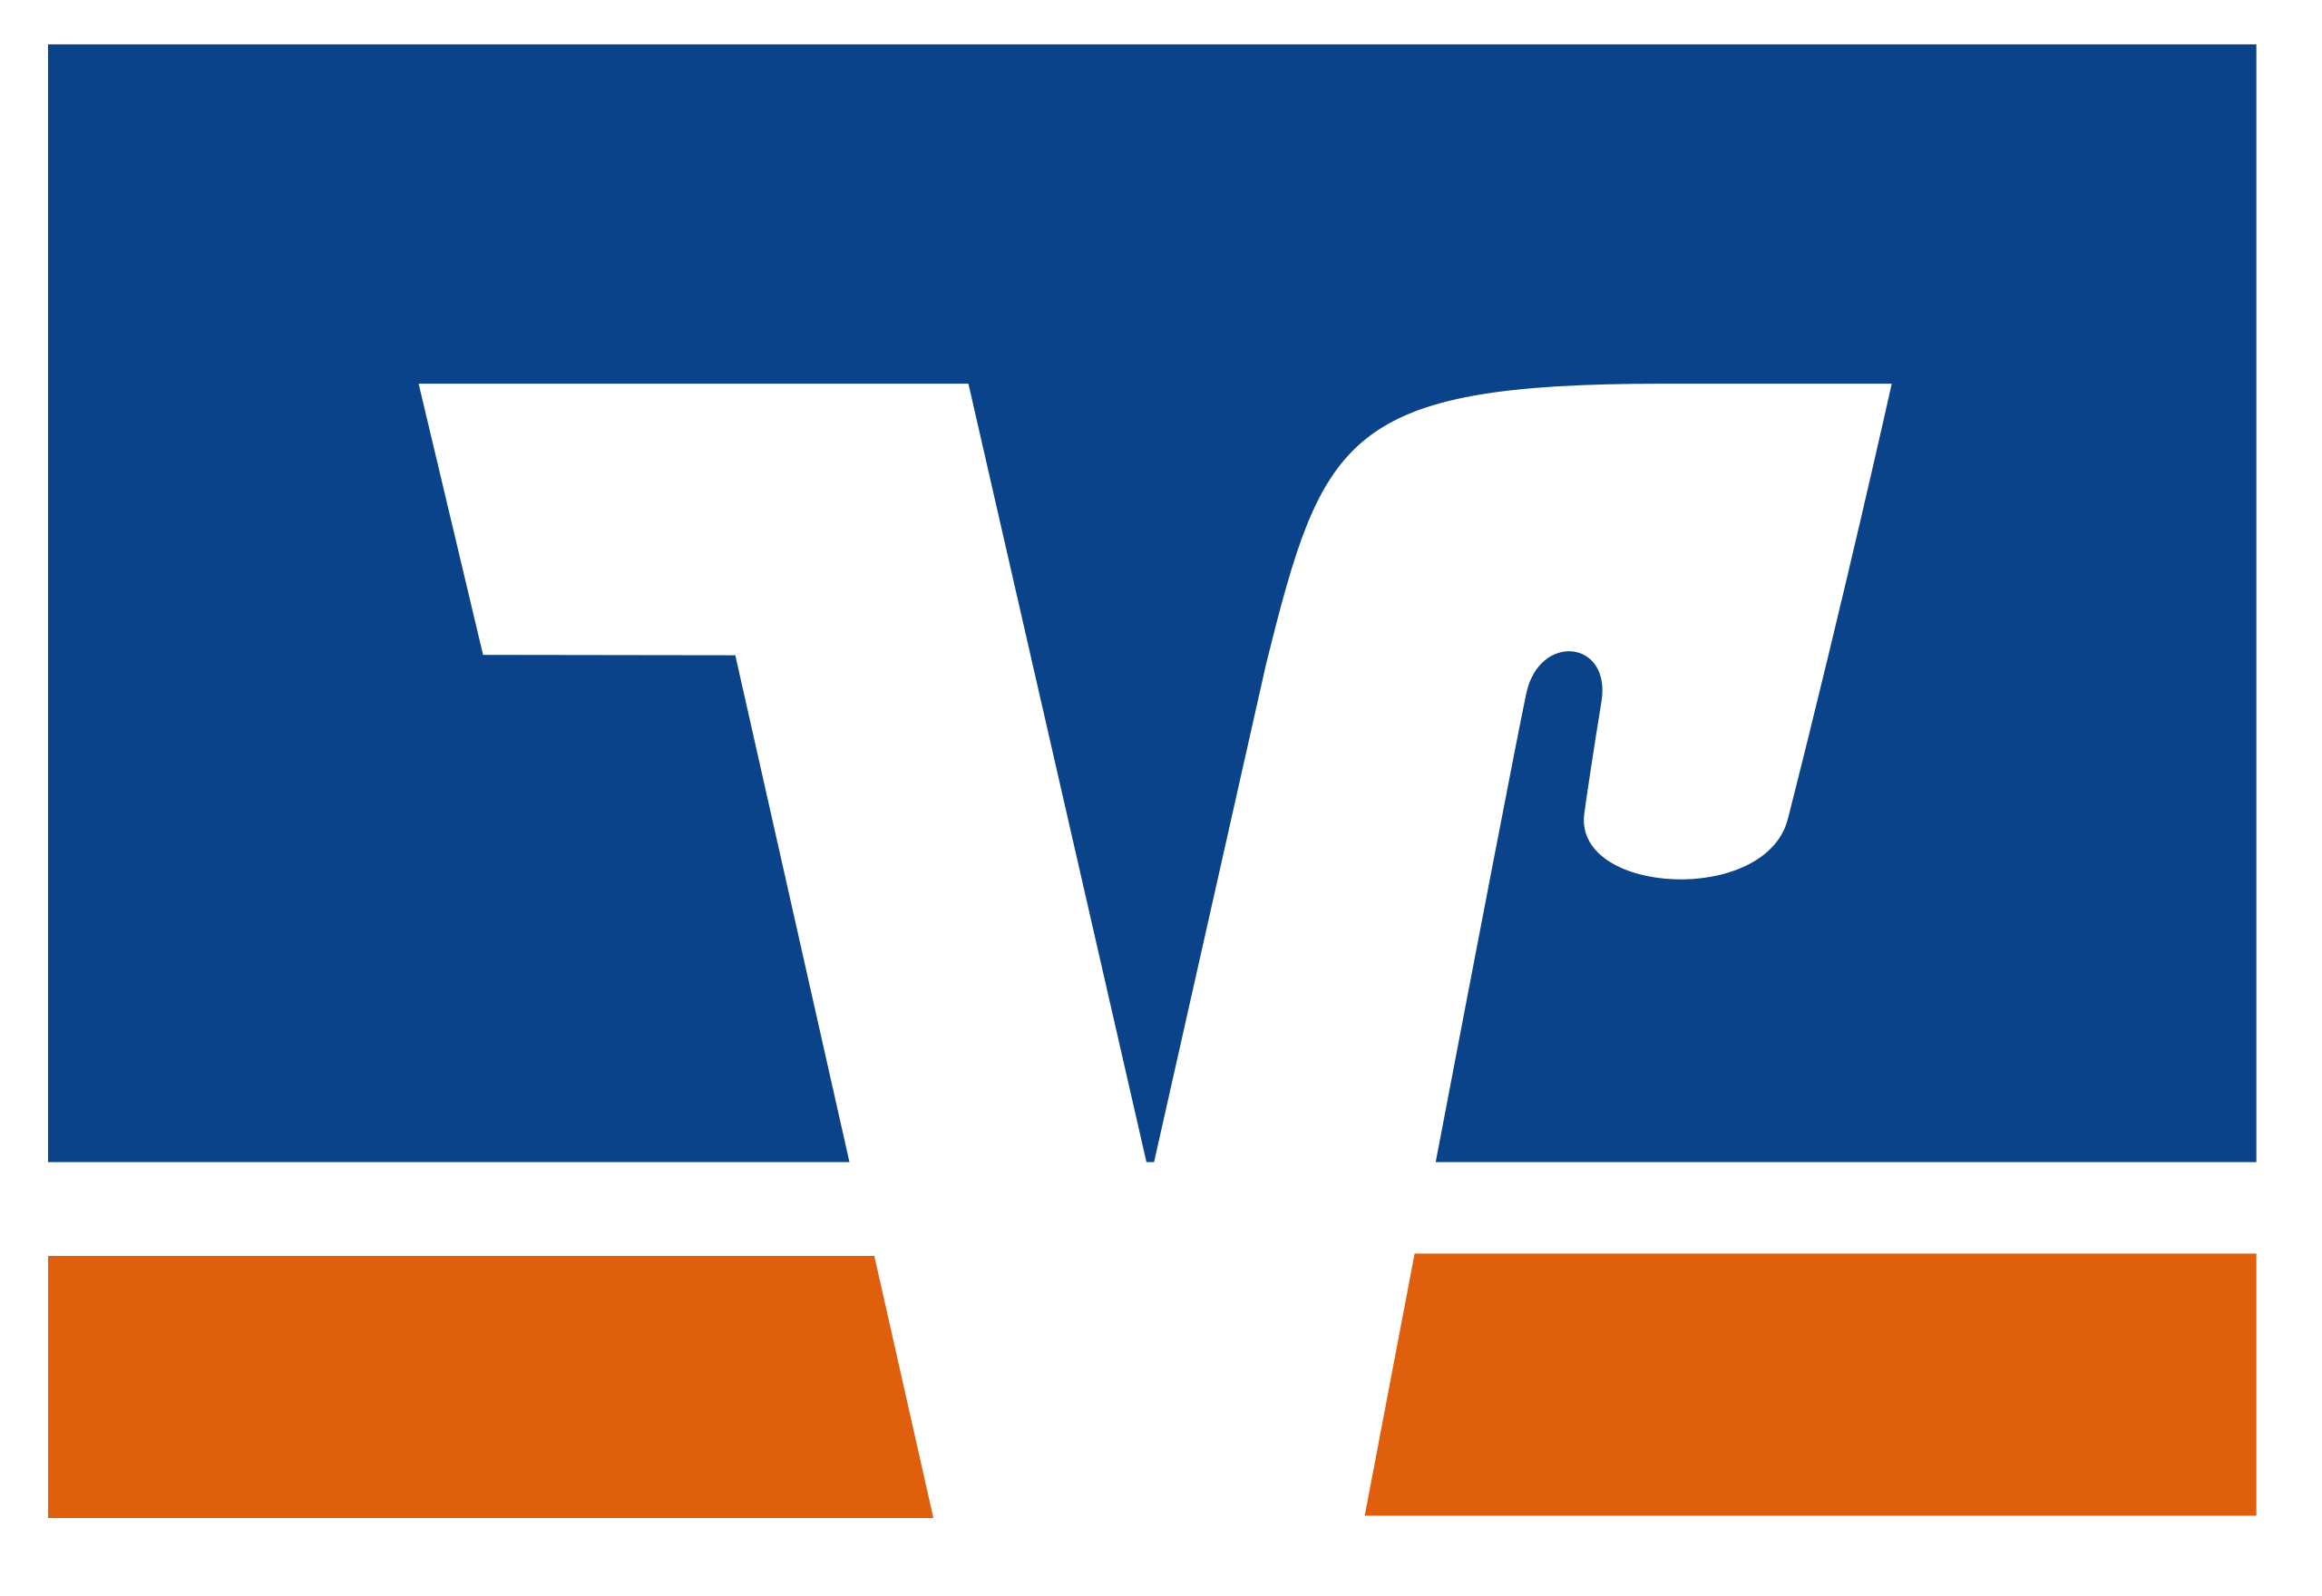 VR-Bank-Logo